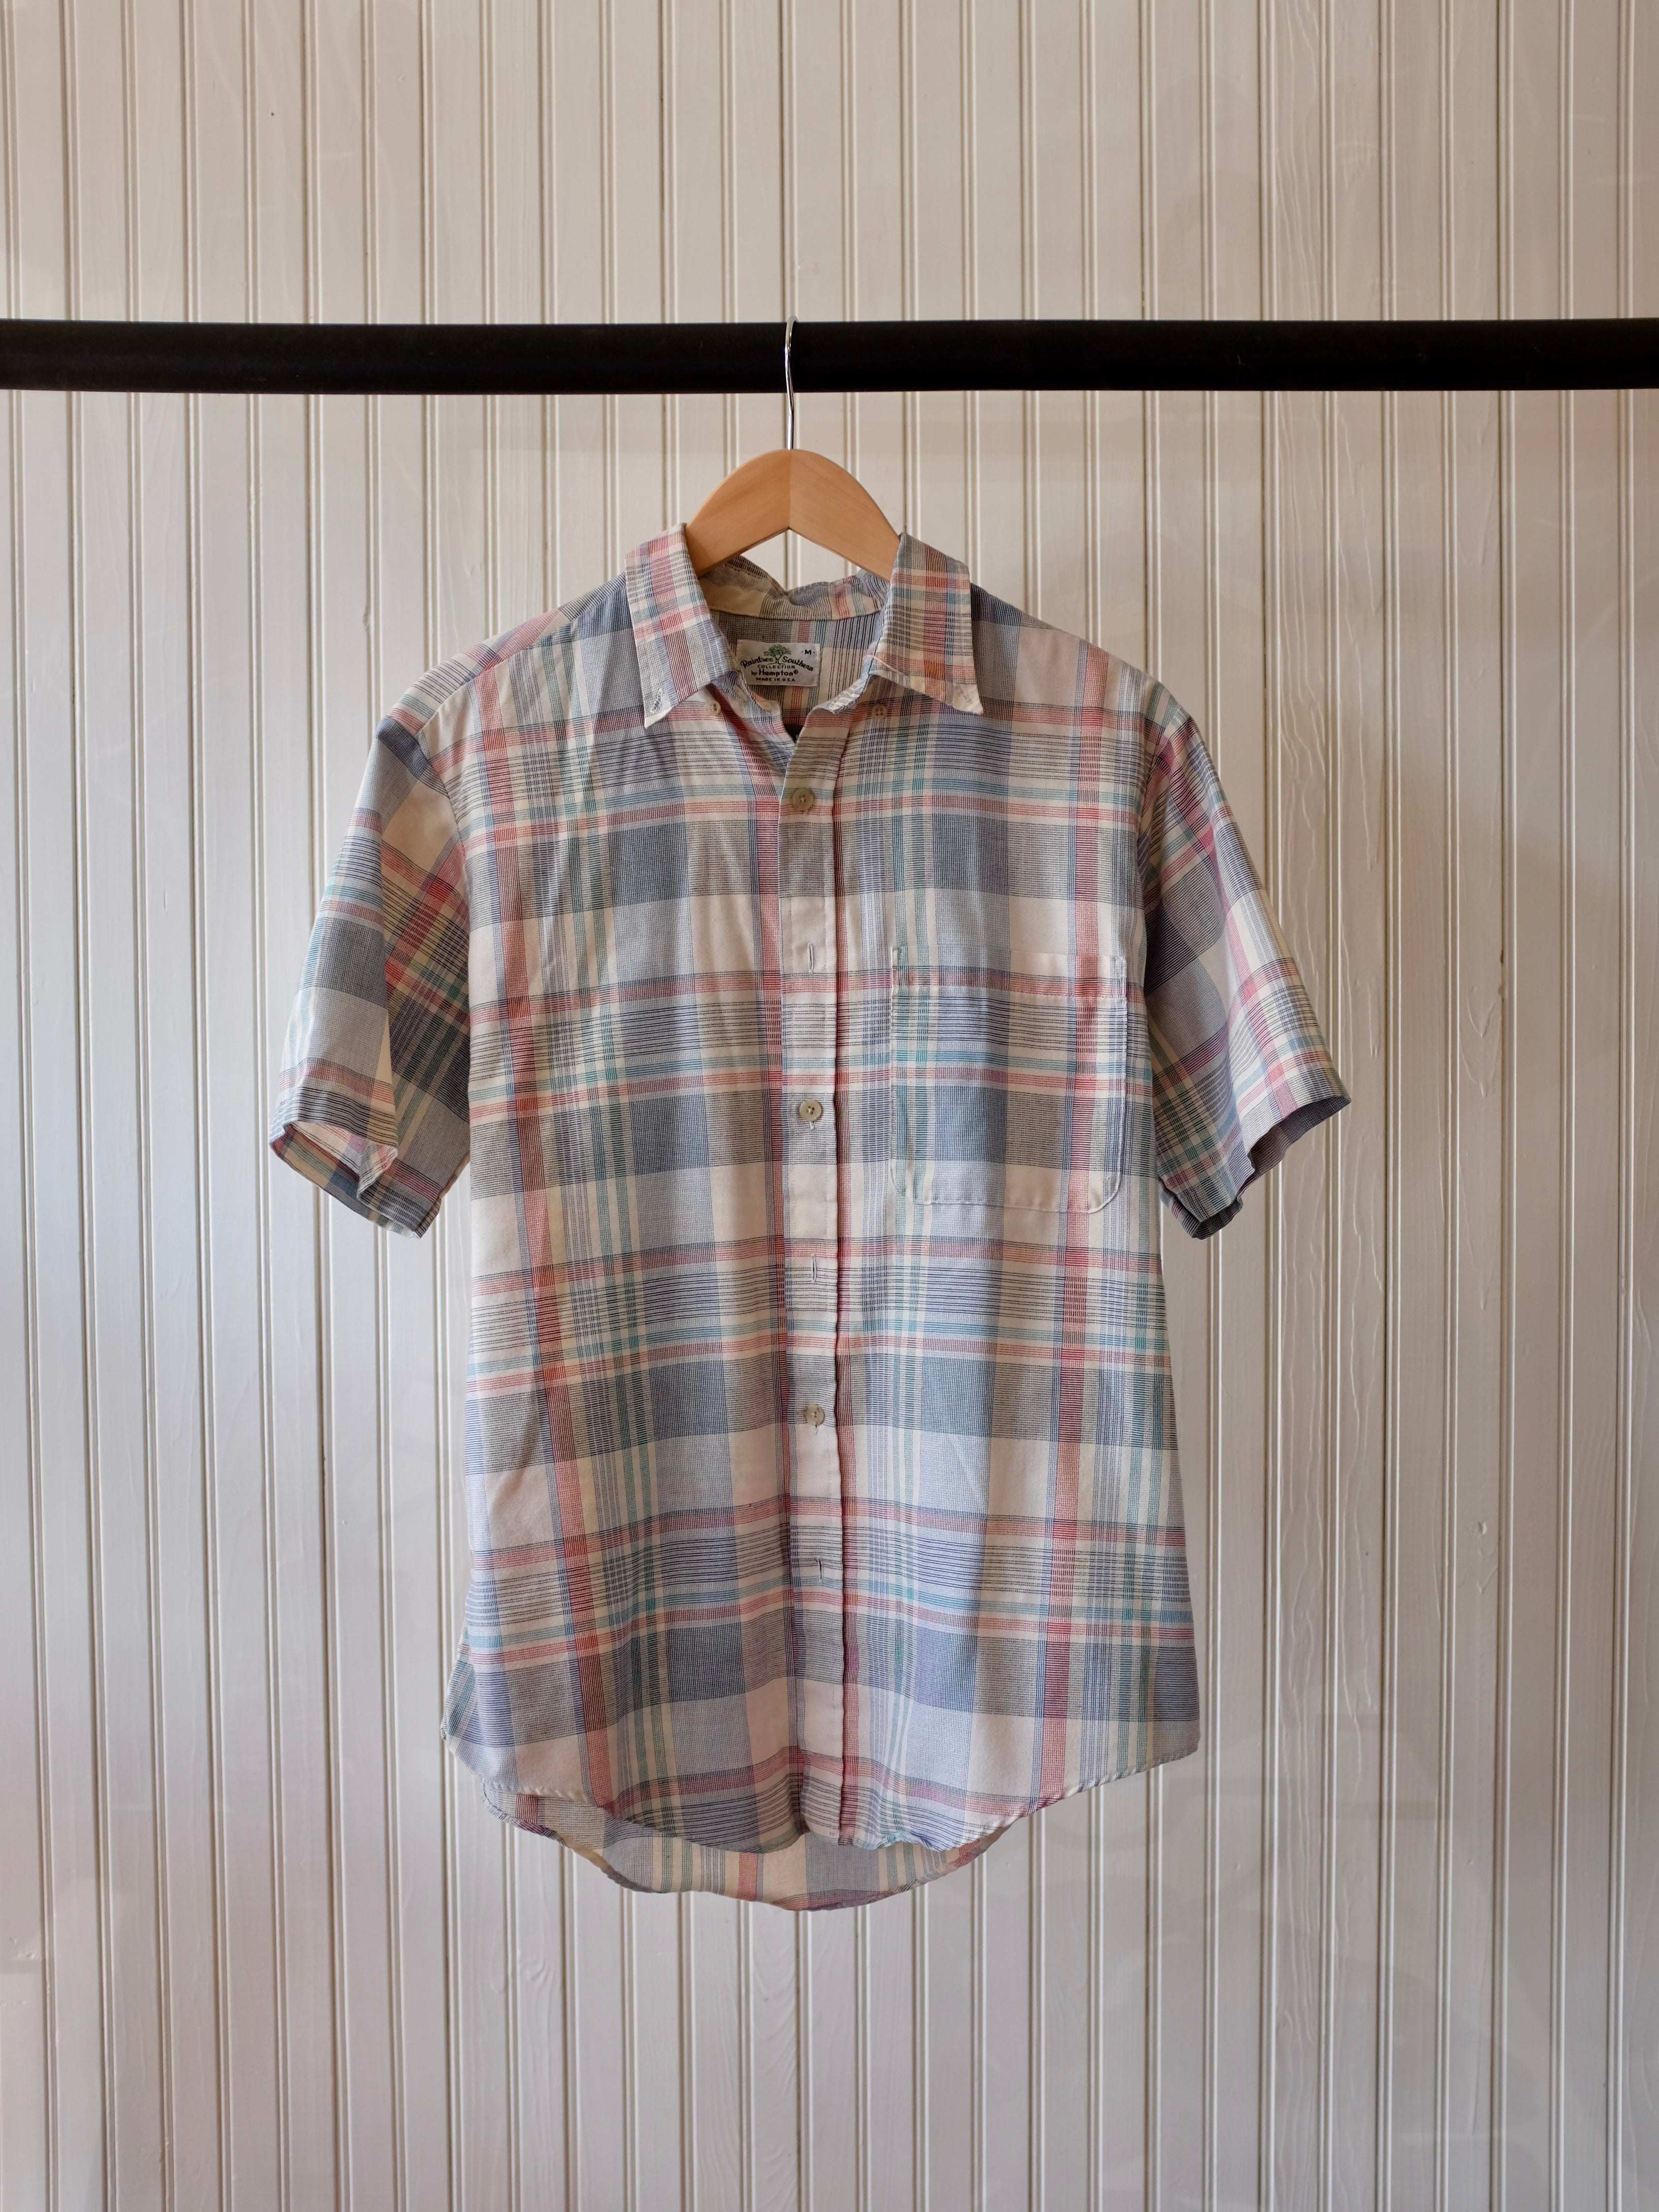 Raintree Southern Shirt - Vintage